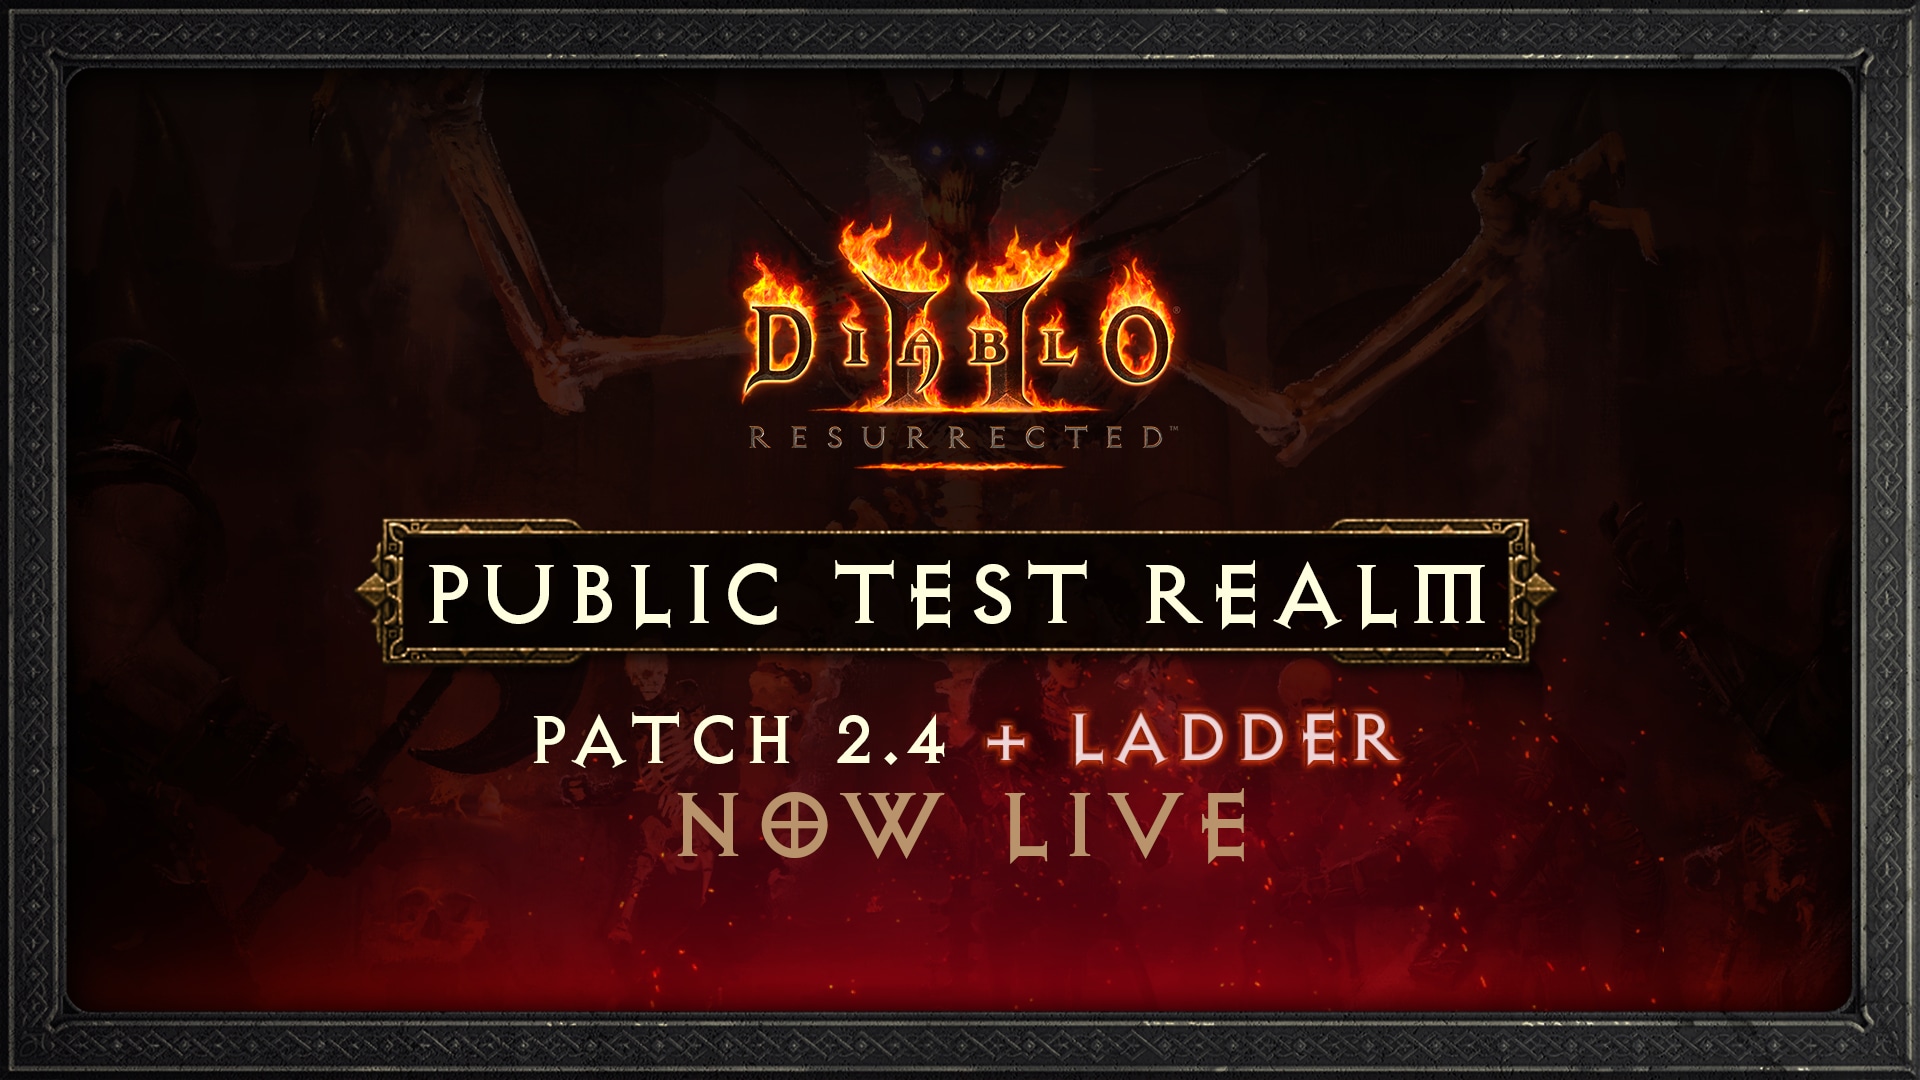 RTP do Patch 2.4 de Diablo II: Resurrected | Teste Competitivo | Ao vivo agora